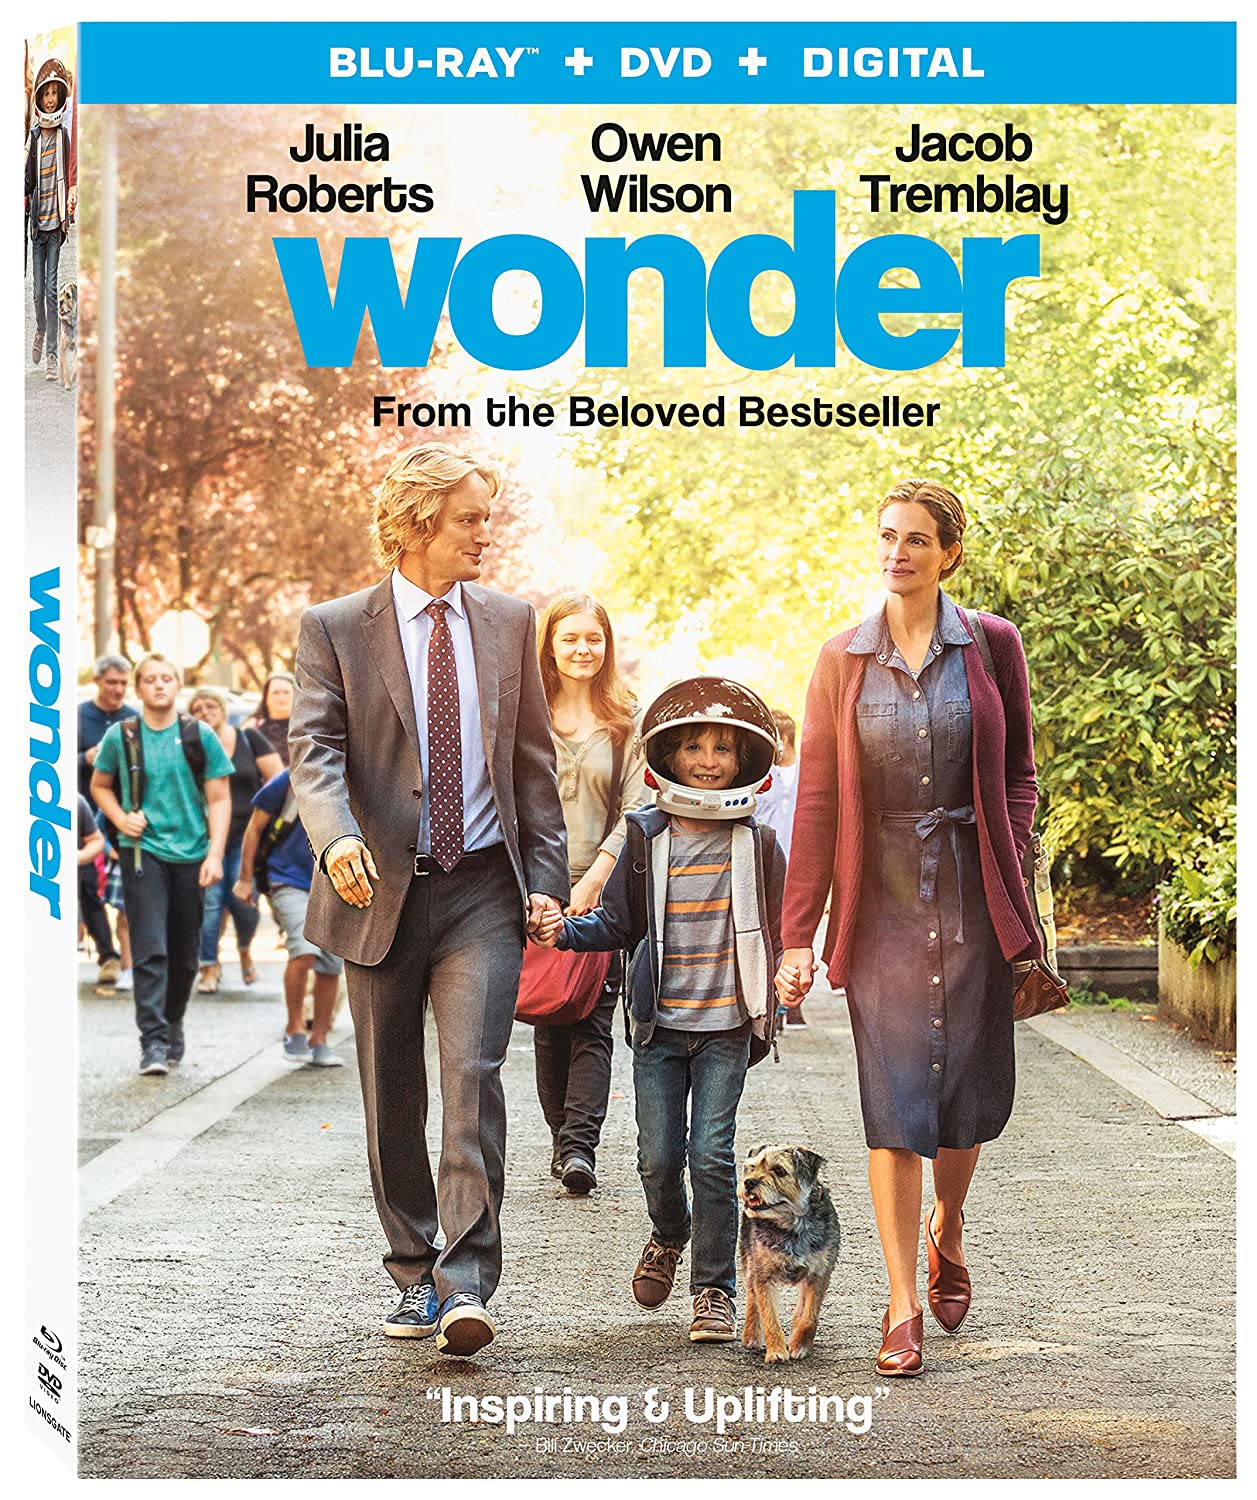 Wonder (with DVD And Digital Download) - Blu-ray [ 2017 ]  - Drama Movies On Blu-ray - Movies On GRUV